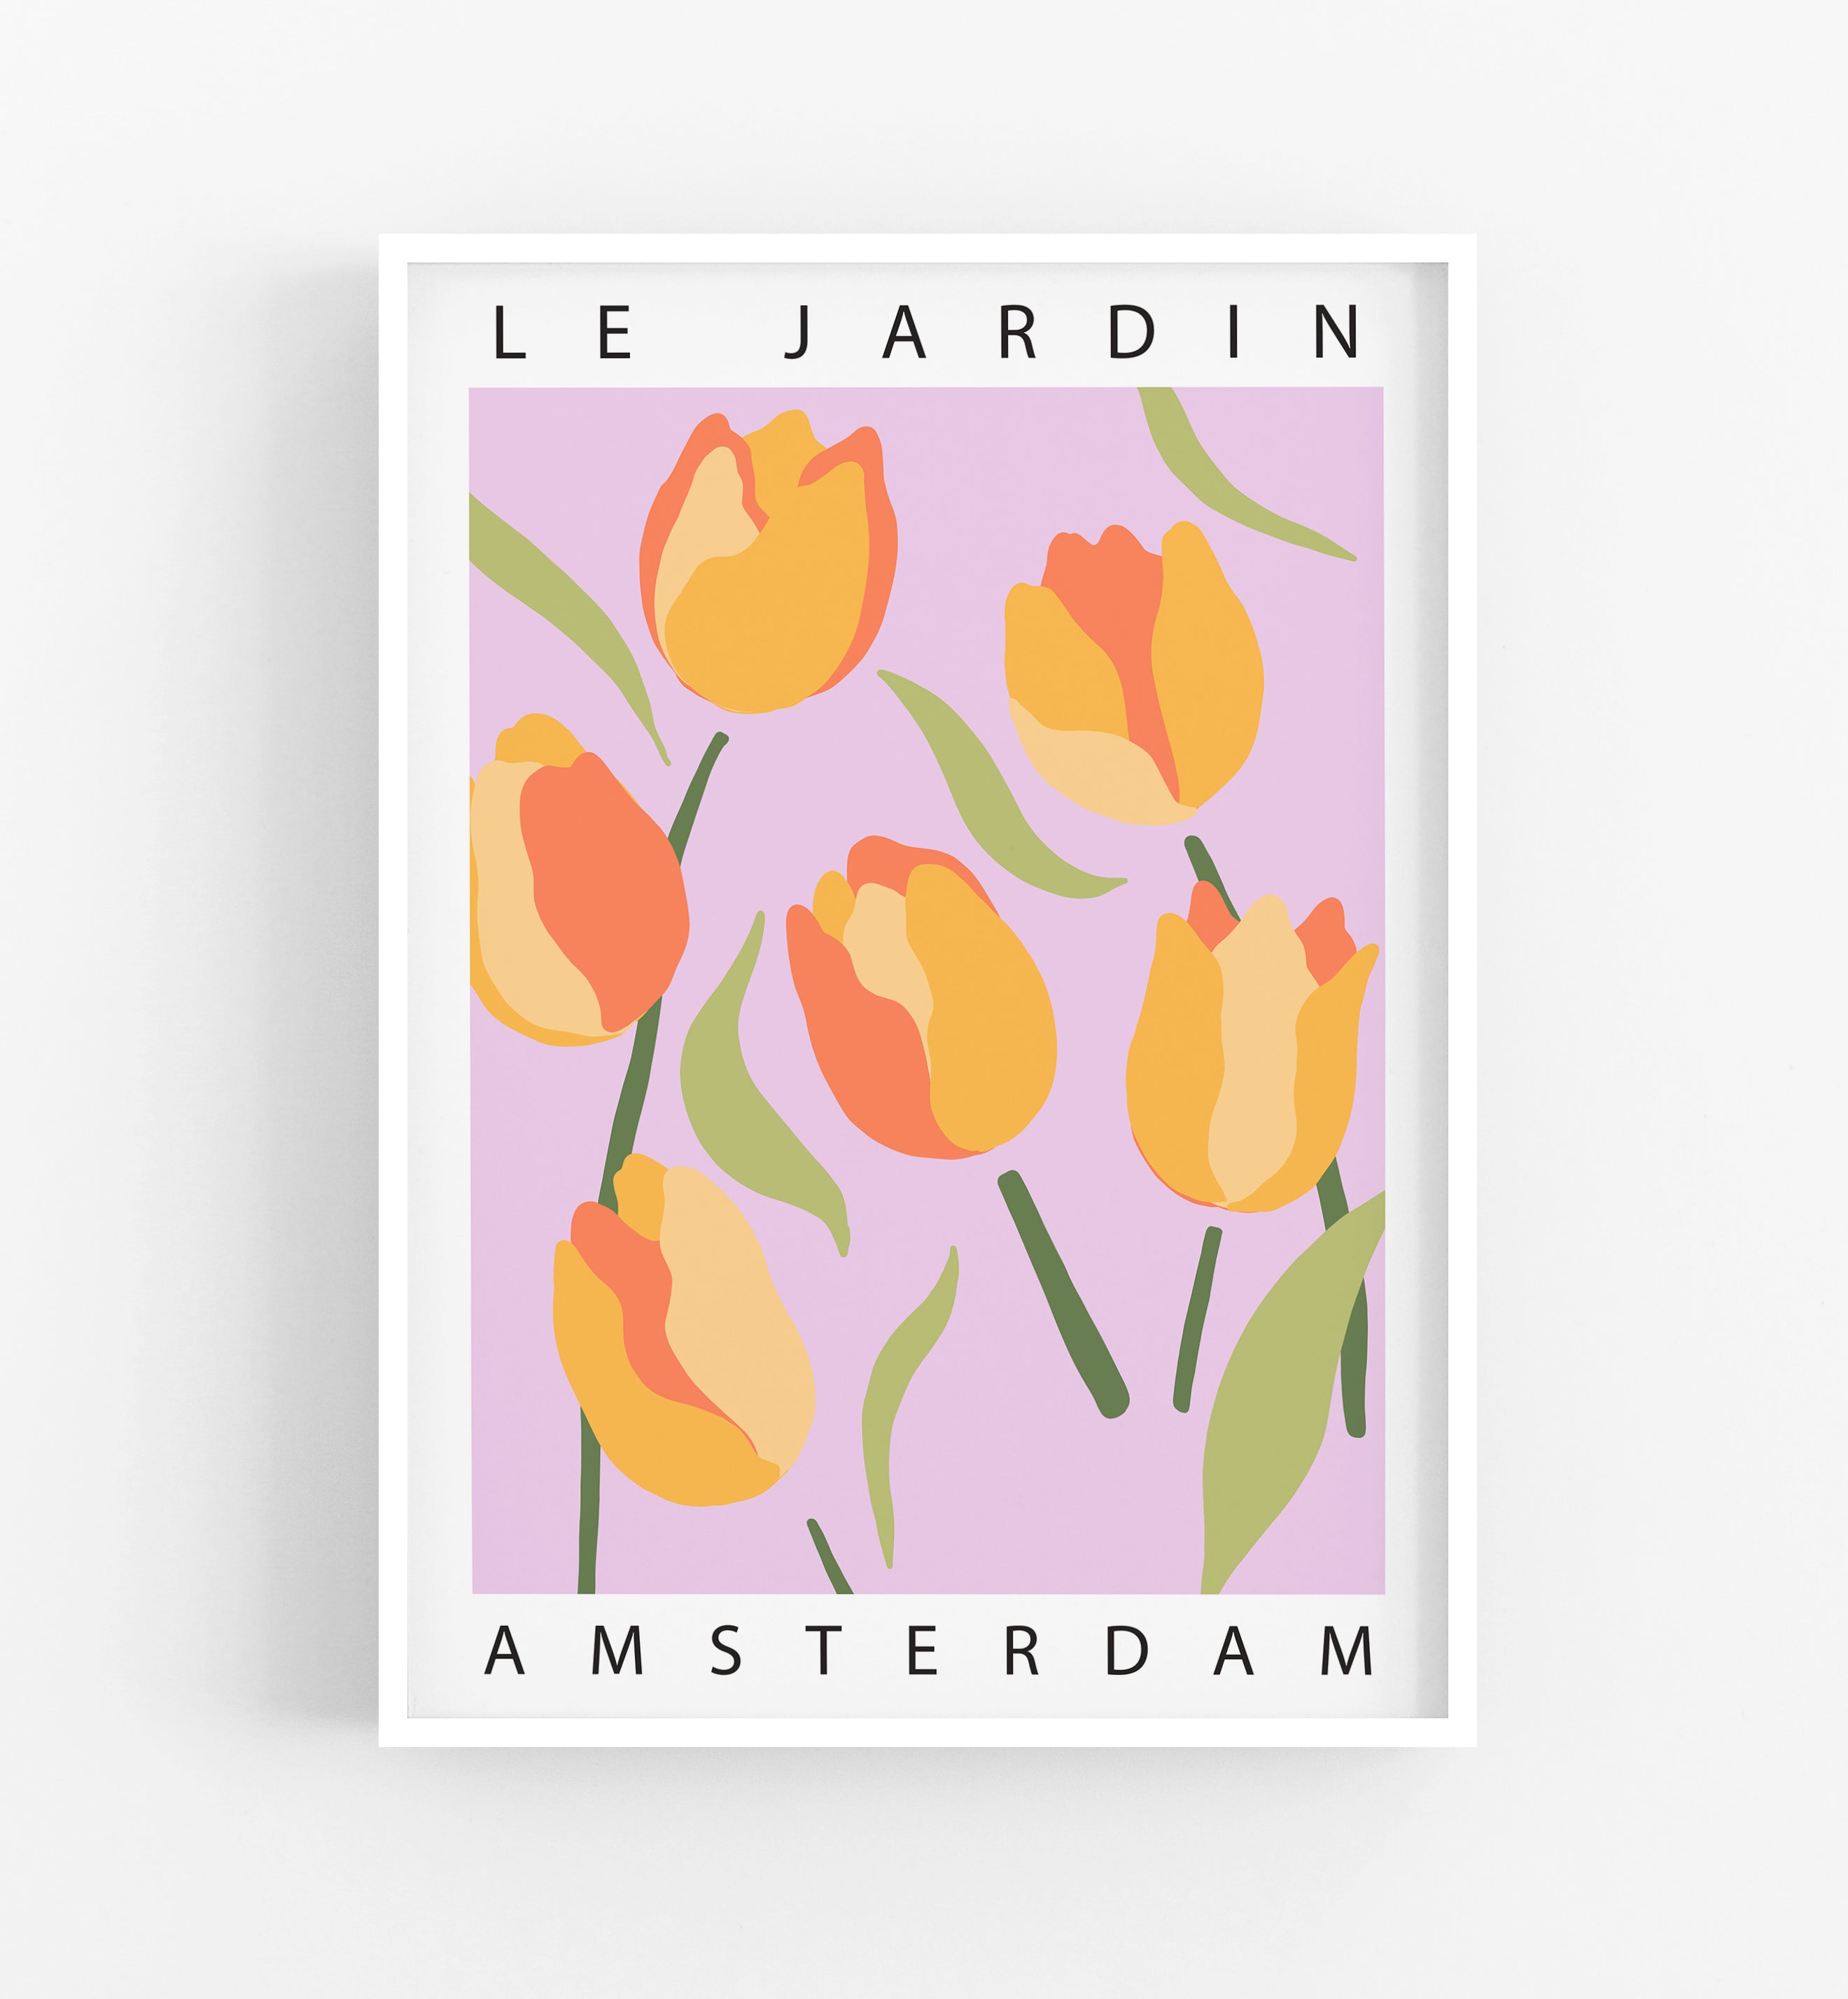 Le Jardin Amsterdam